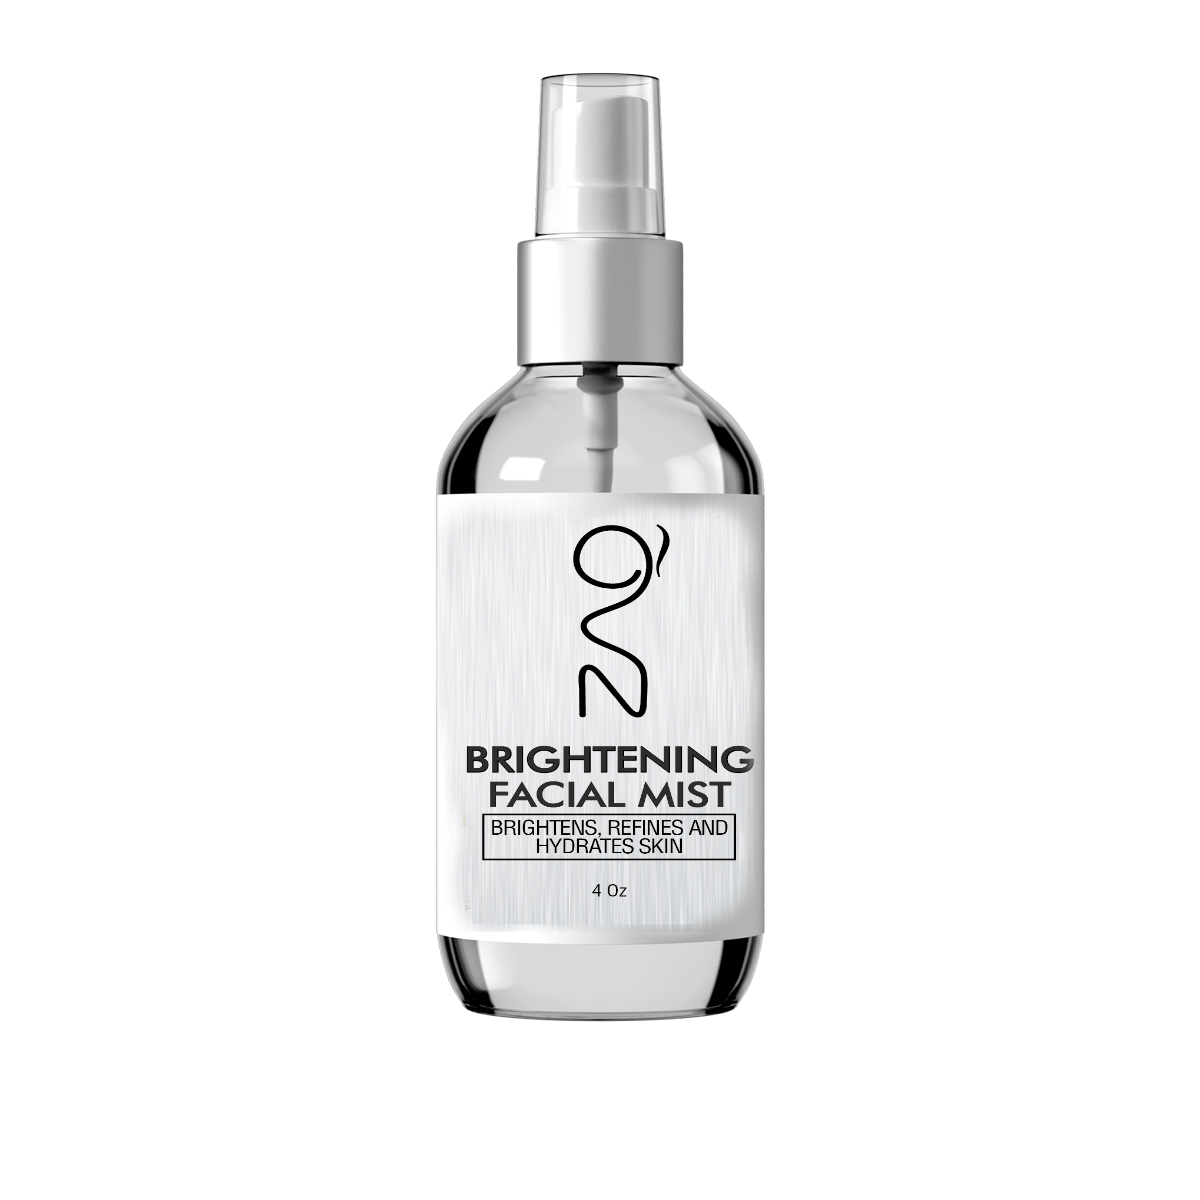 ZAQ Brightening Organic Sake + Lime Facial Mist 4oz - Brightens, Refines And Hydrates Skin - Popularelectronics.com